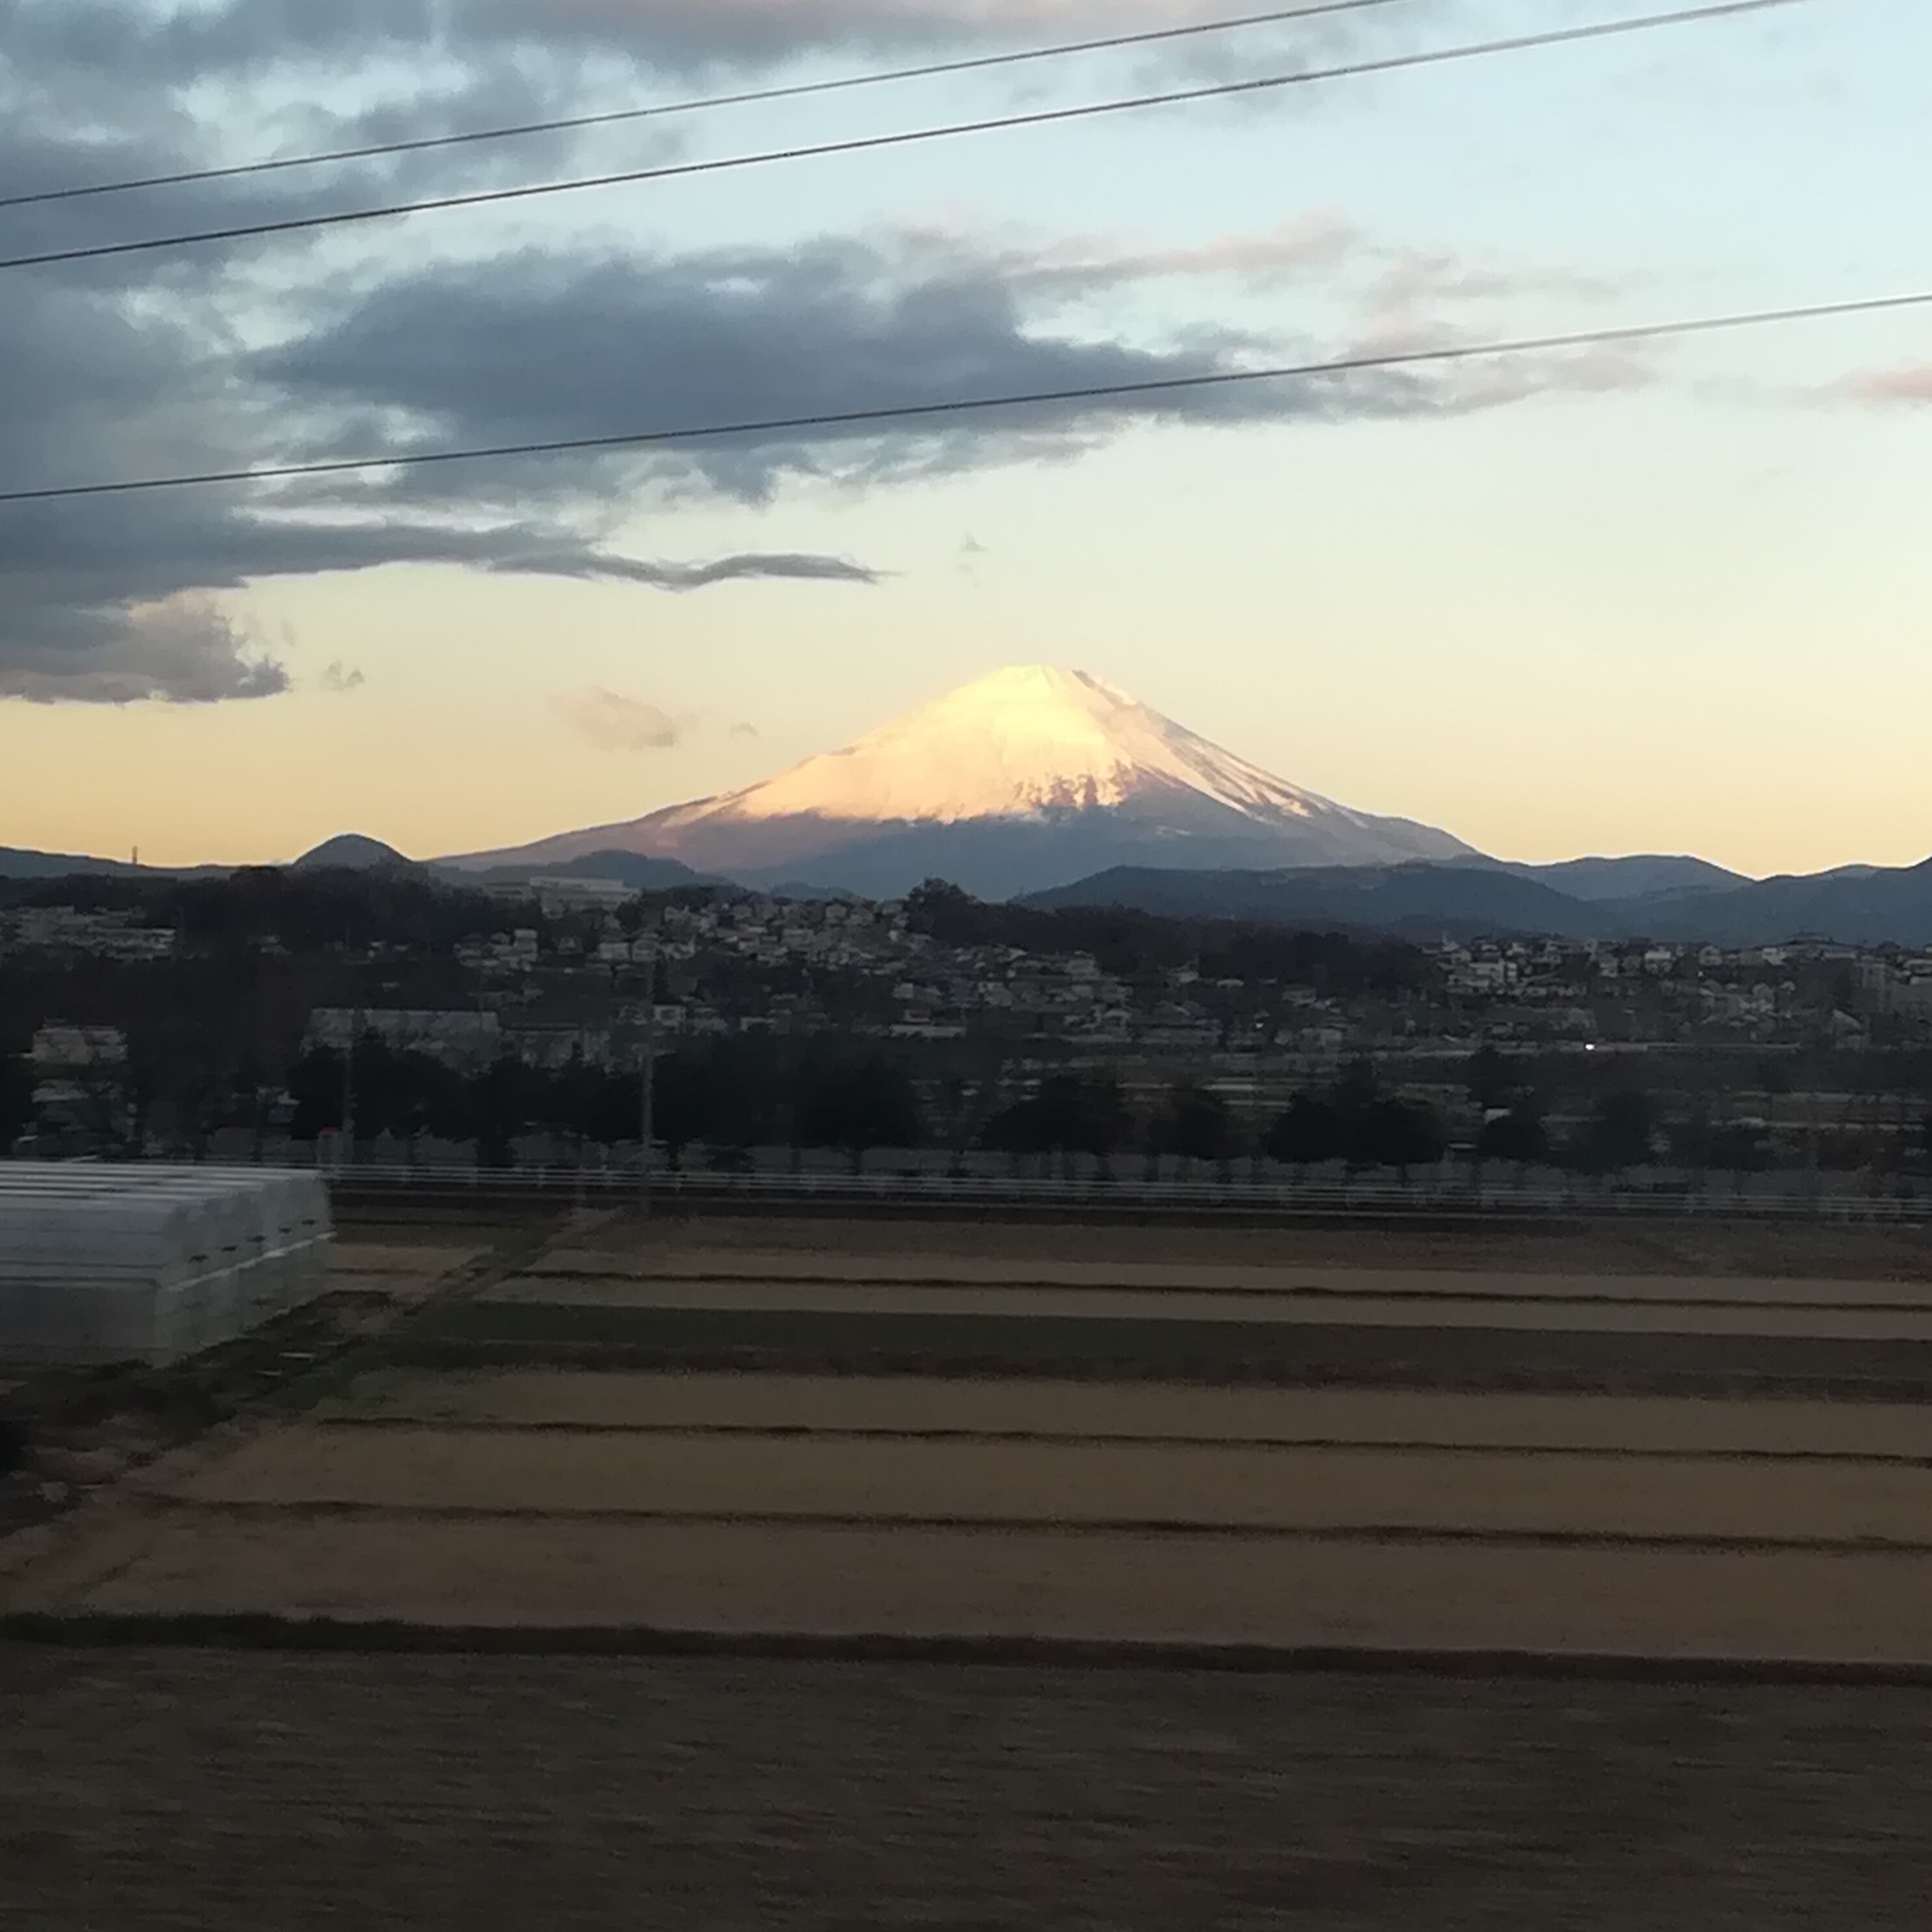 Mt. Fuji from Shinkansen Bullet train before reaching Odawara Kanagawa in Japan